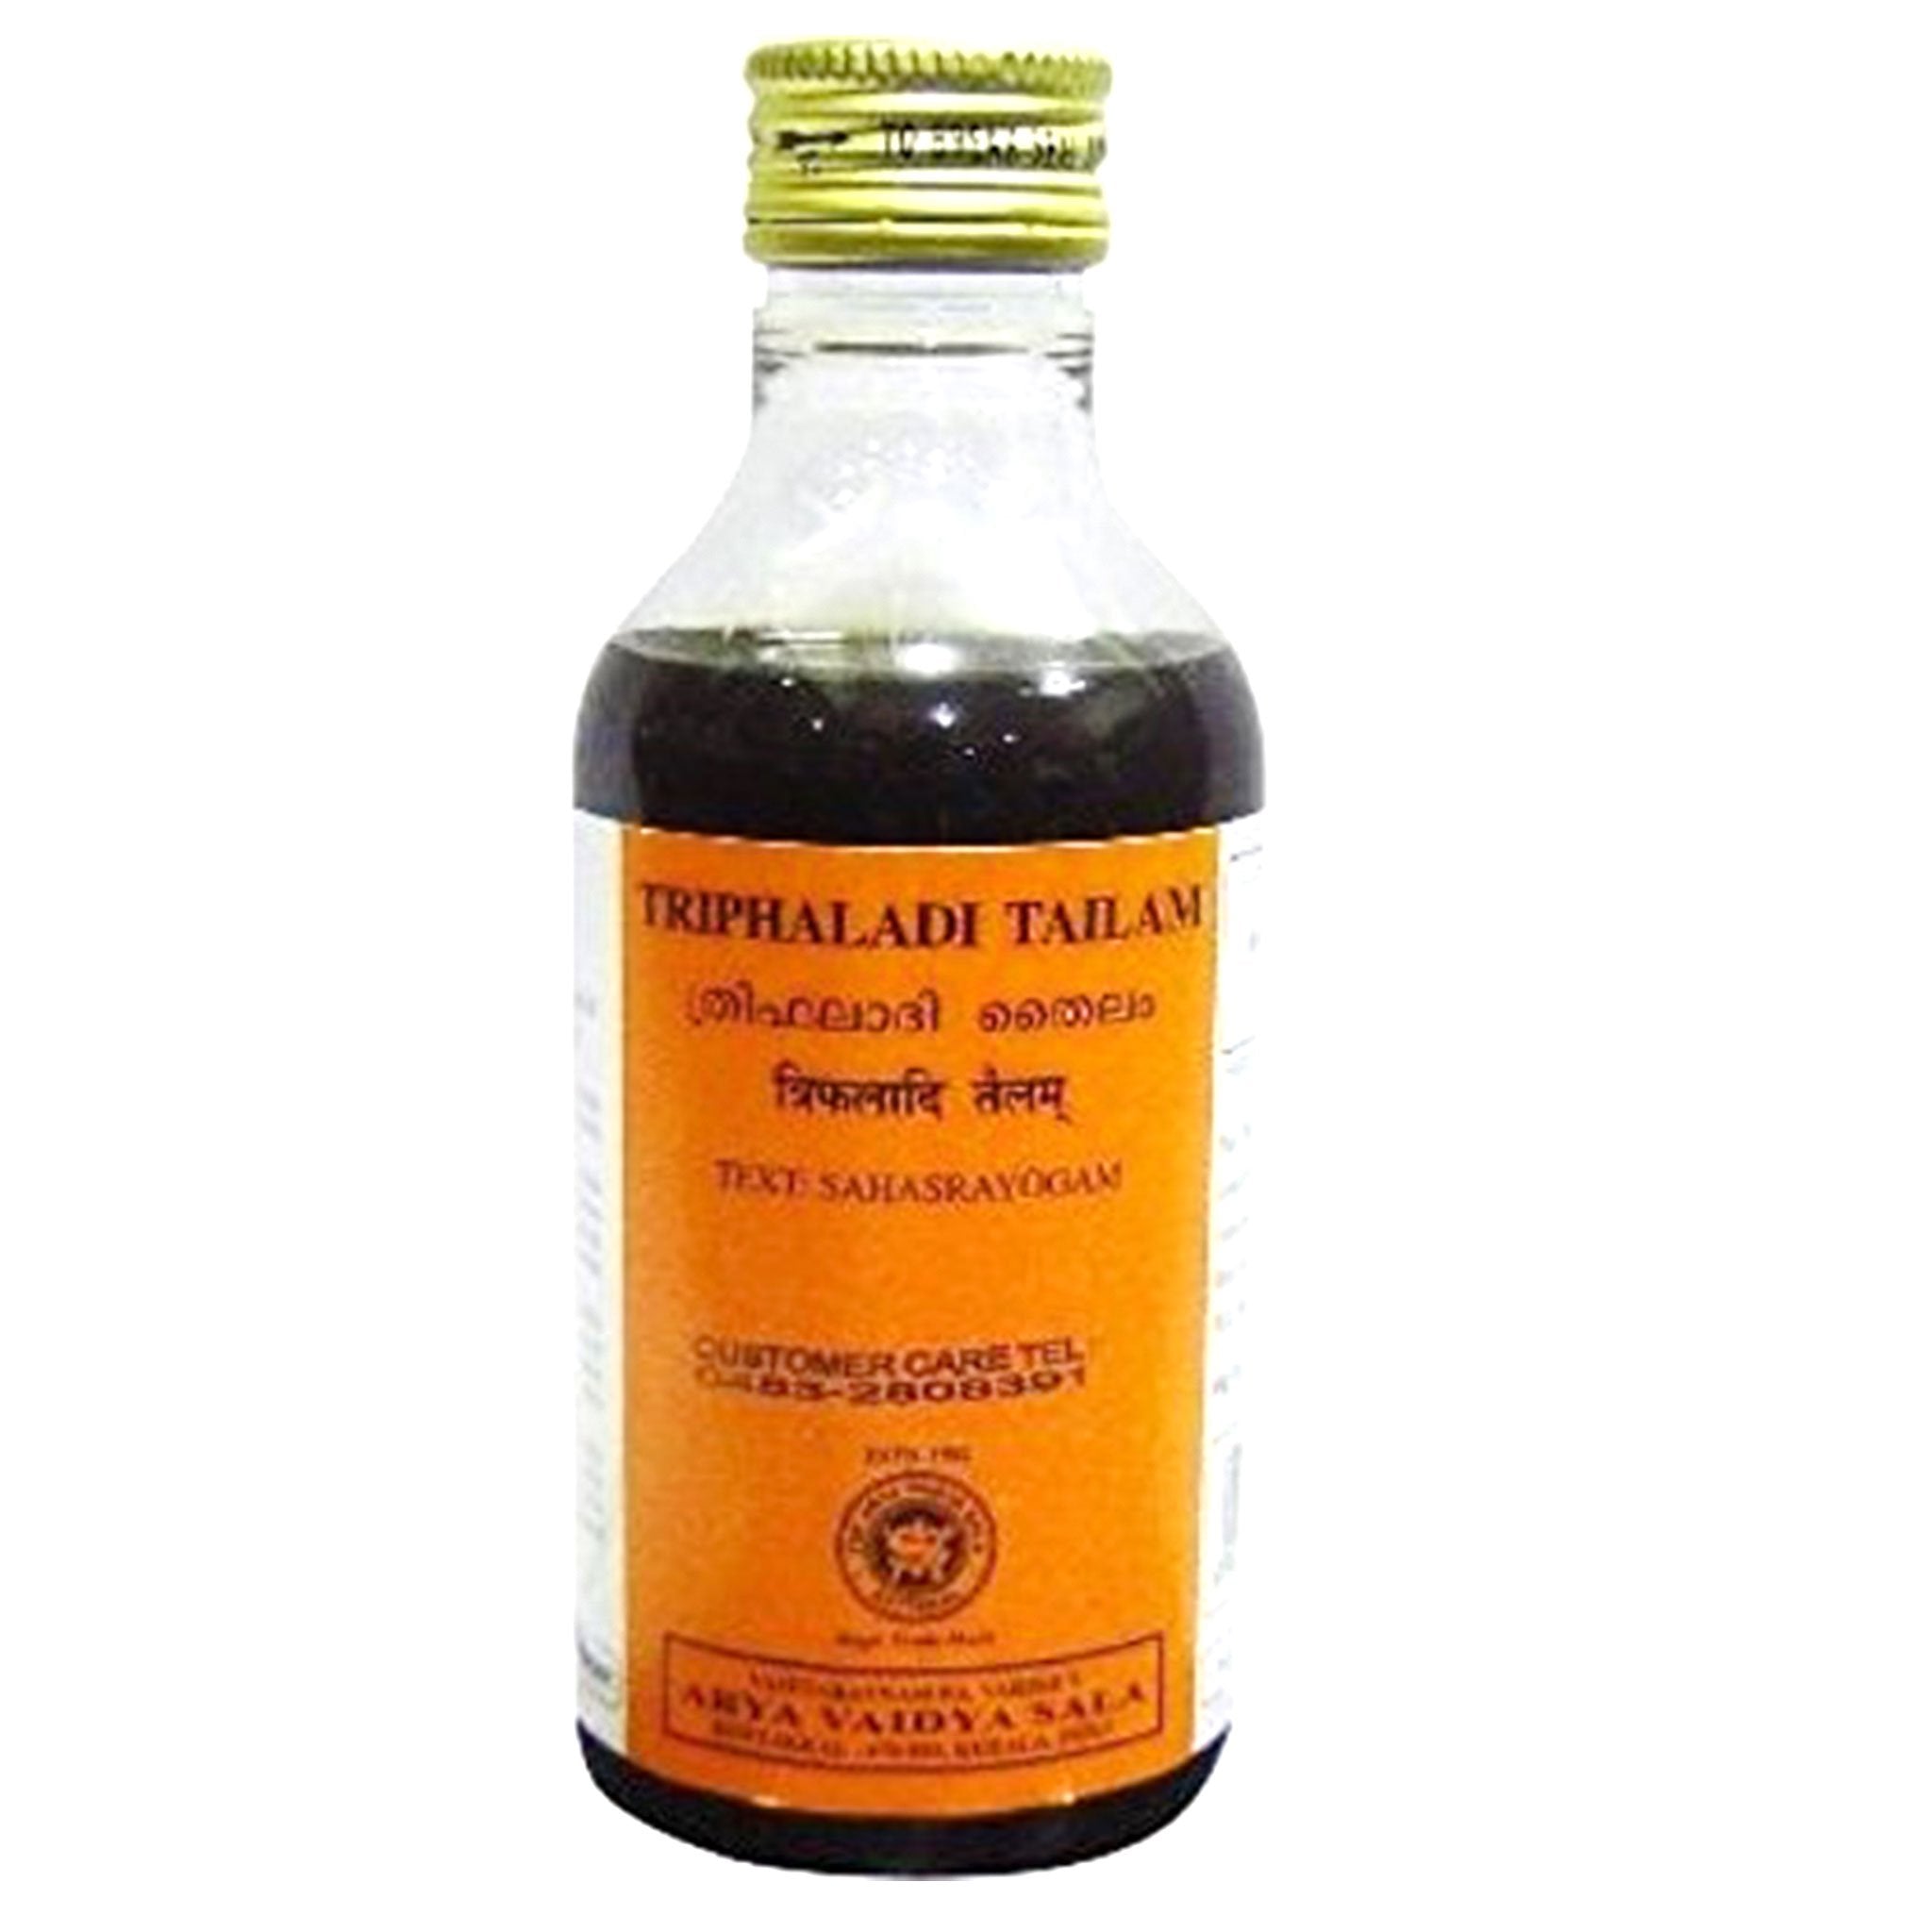 Kottakkal Triphaladi Tailam 200ml Value Pack of 12 